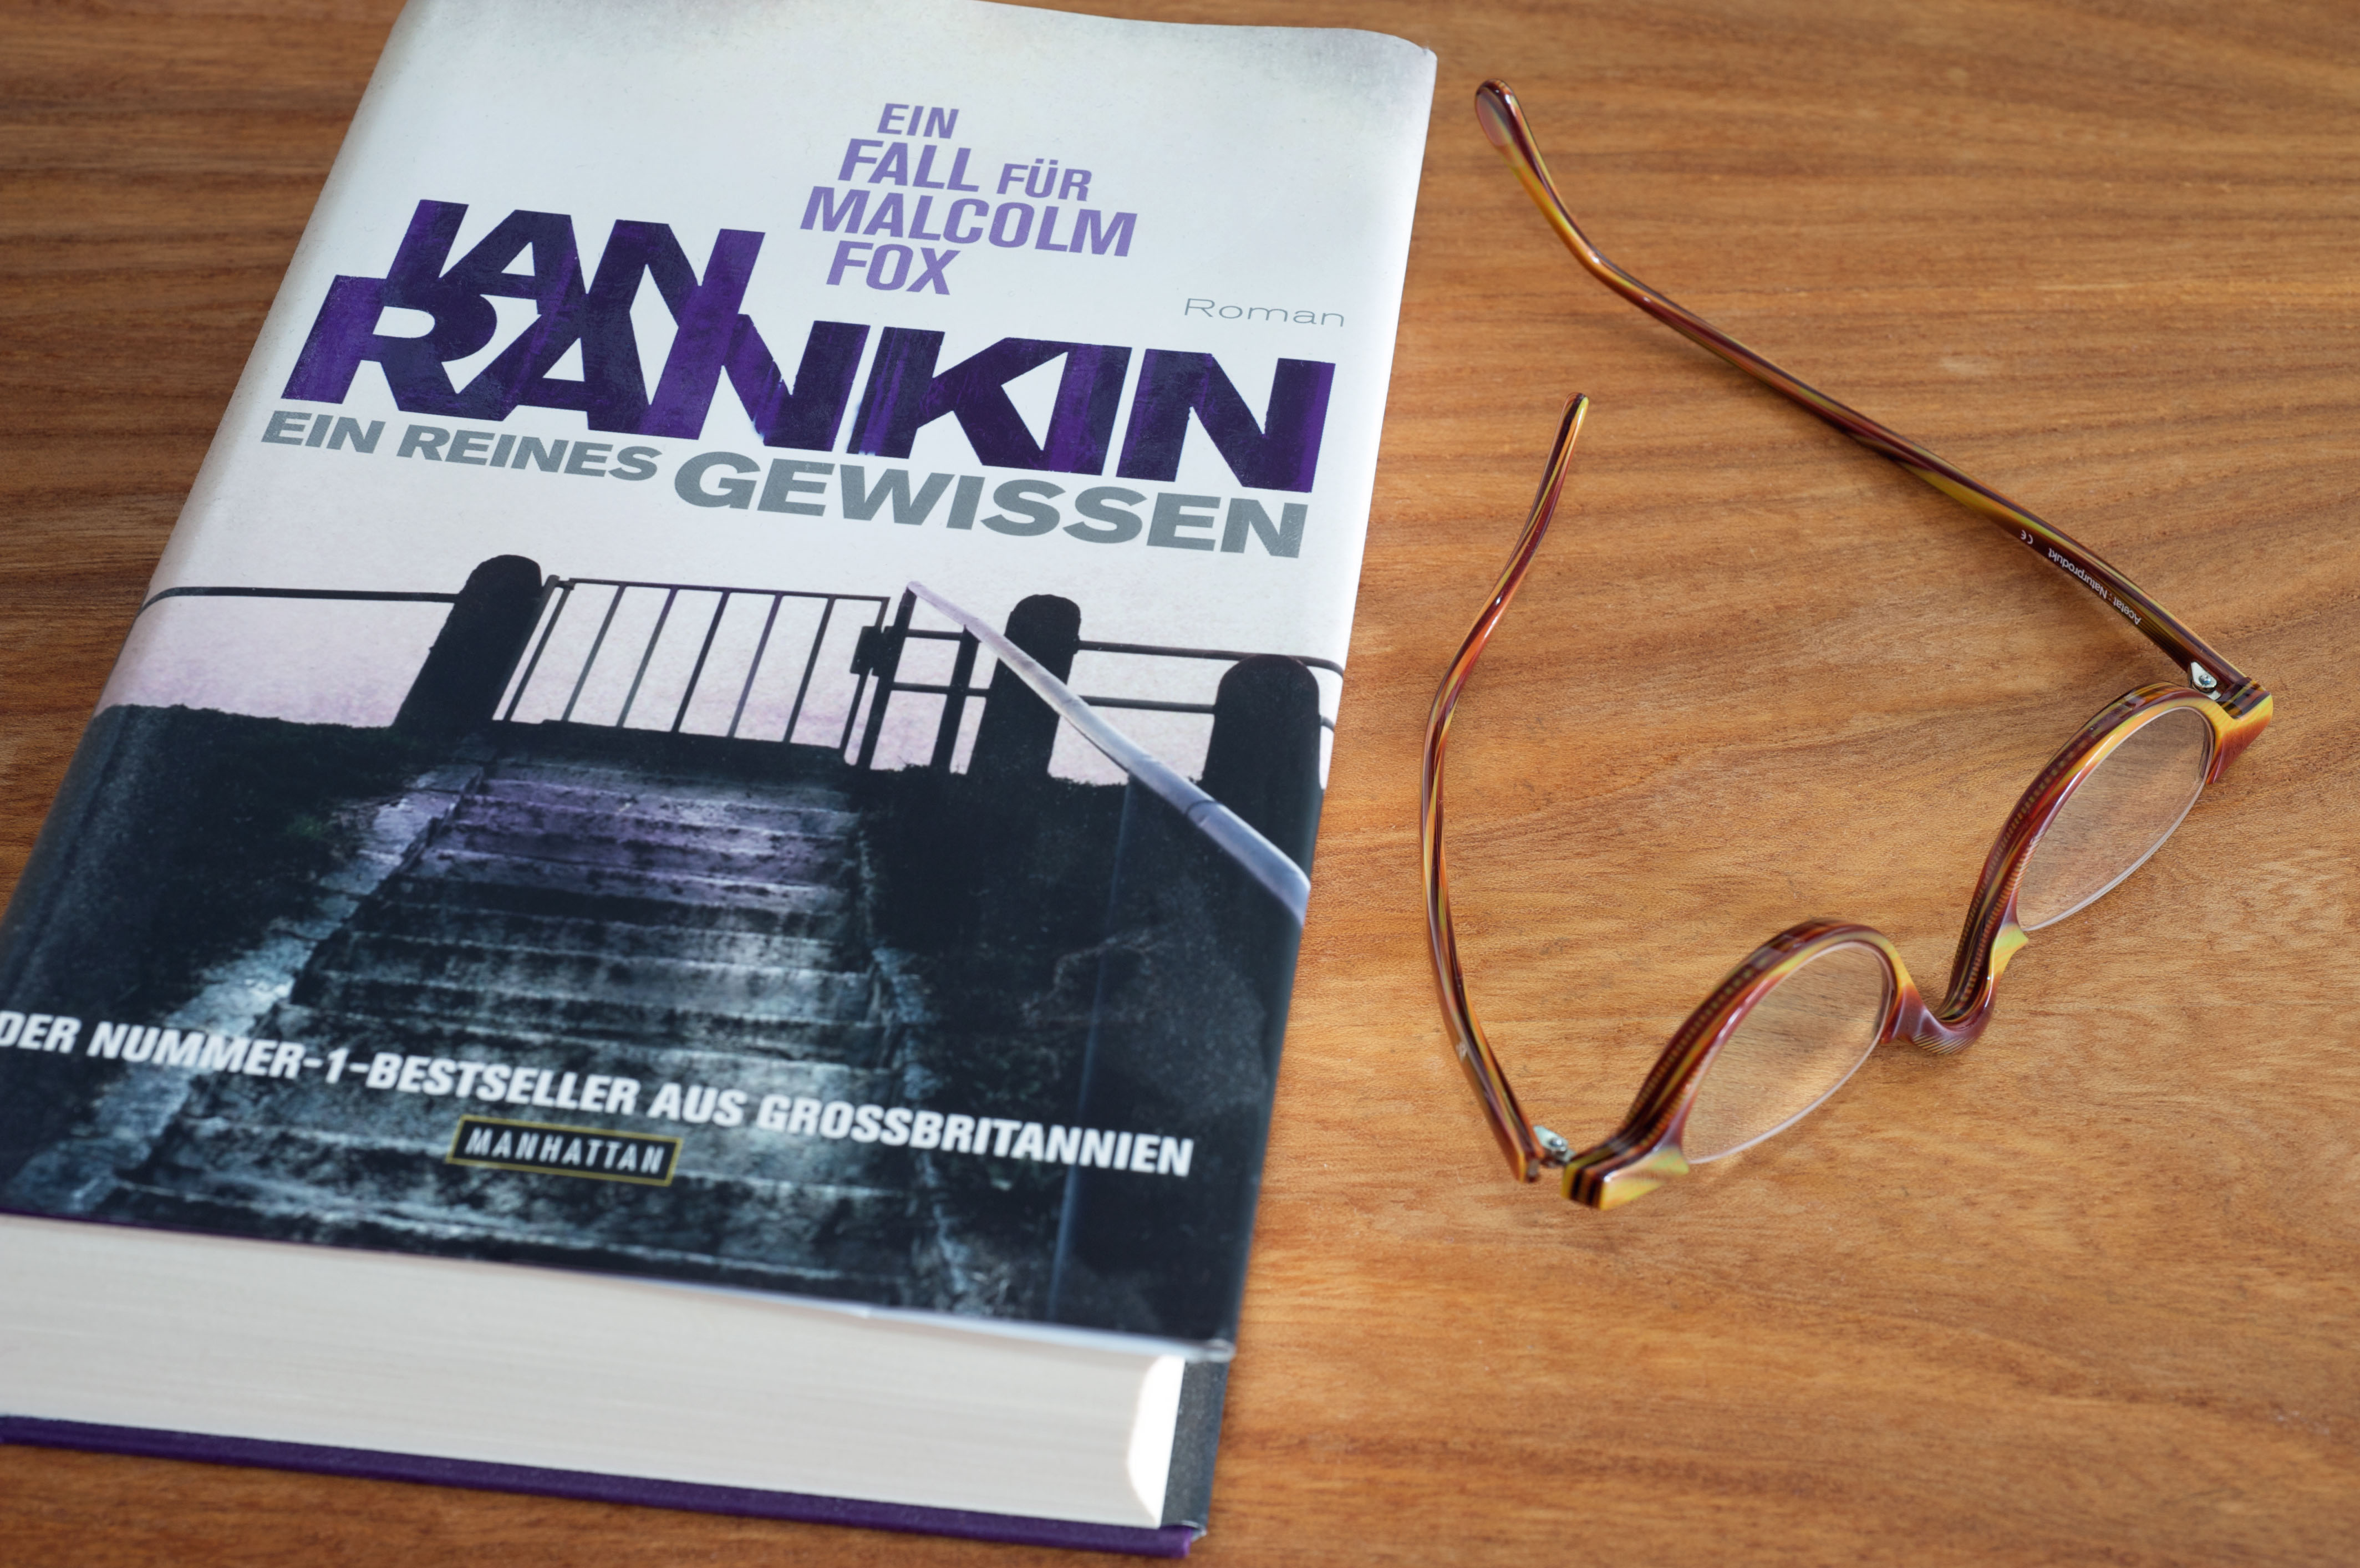 An Ian Rankin book translated into German